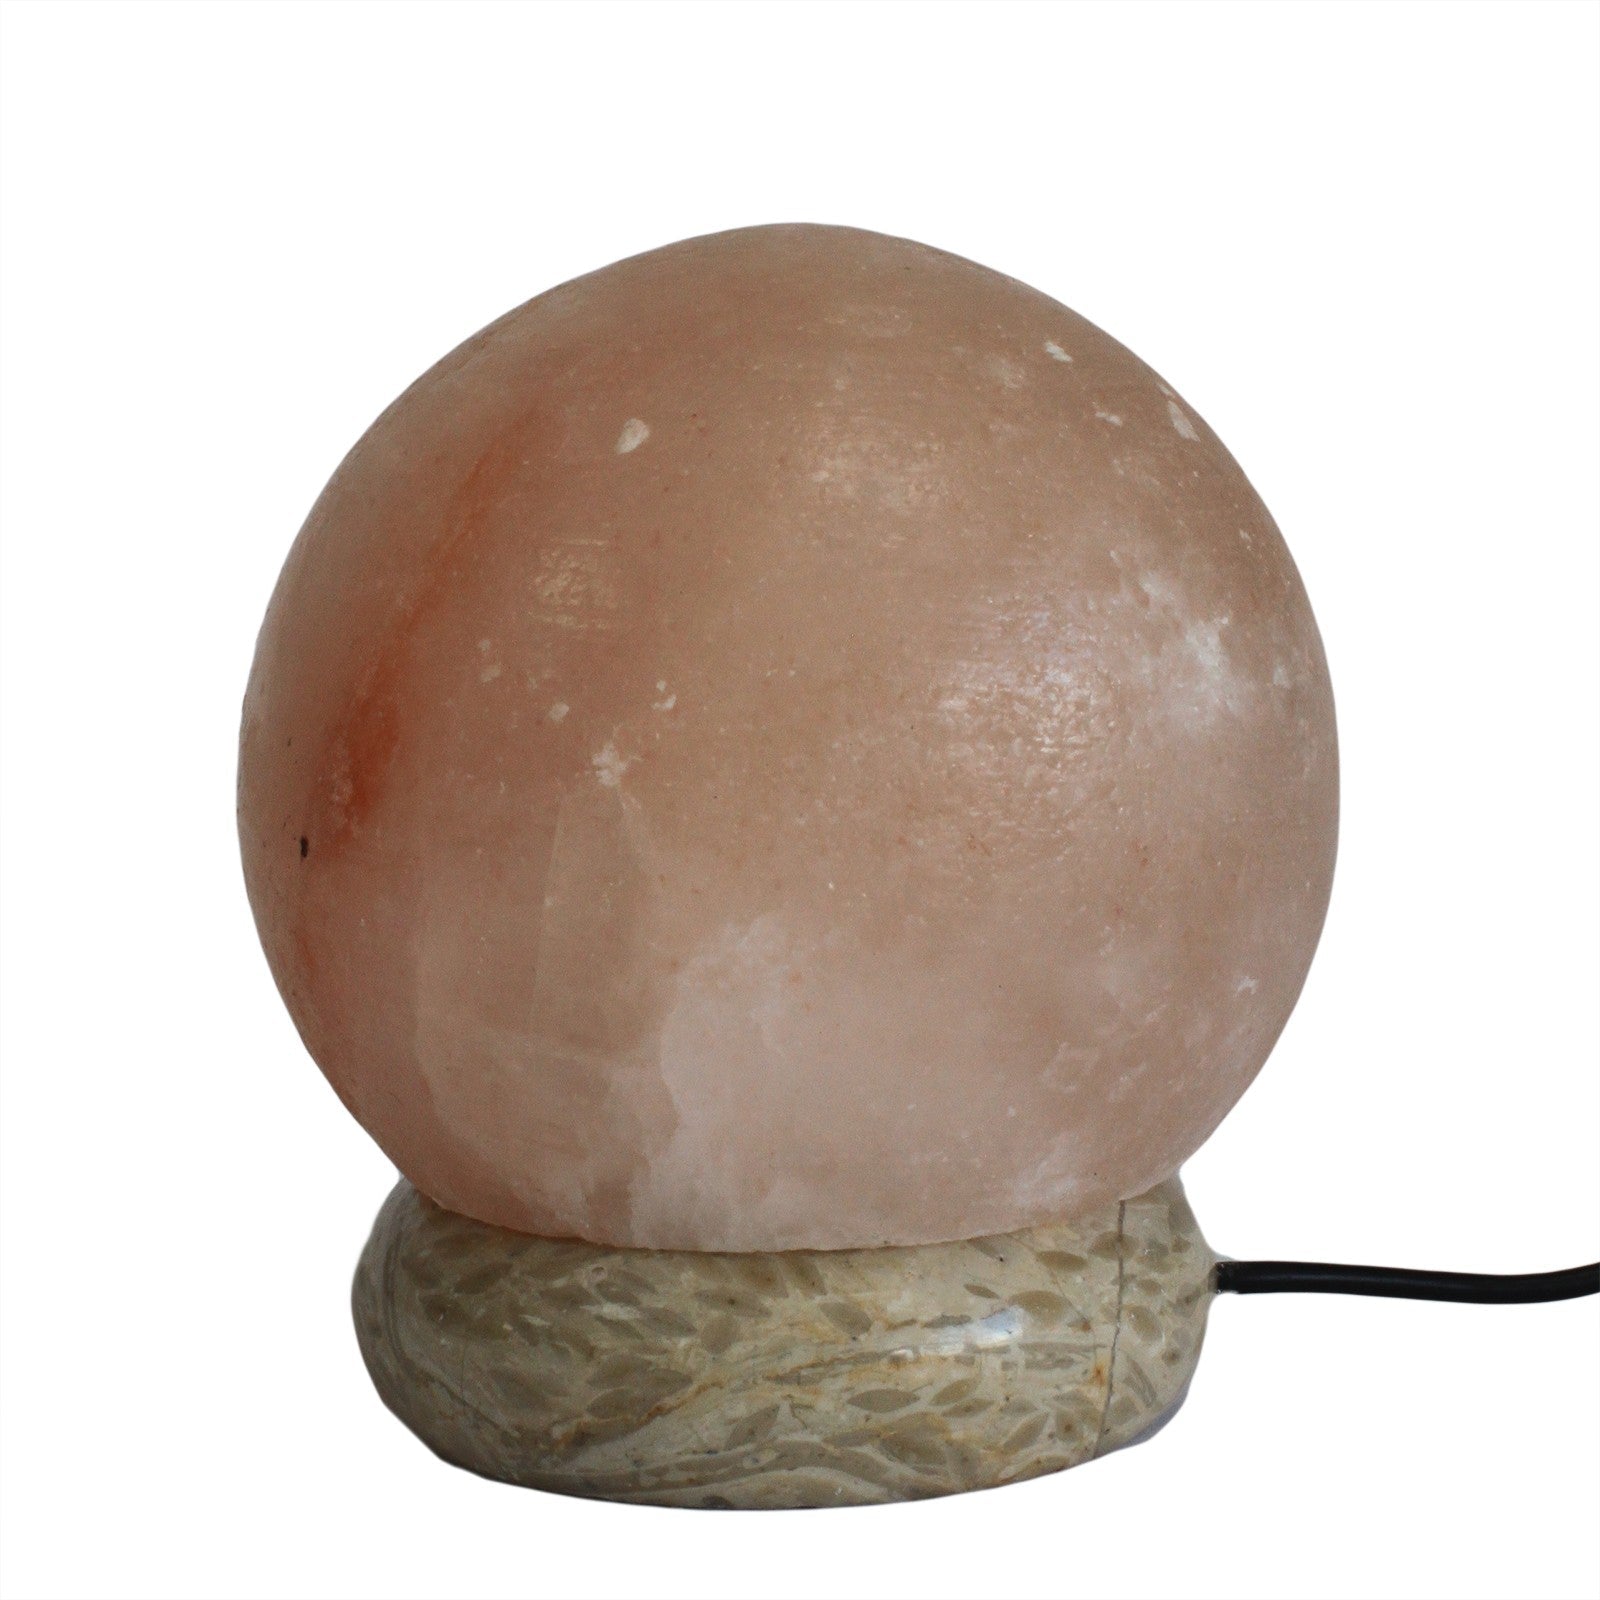 View Quality USB Ball Salt Lamp 8 cm single information